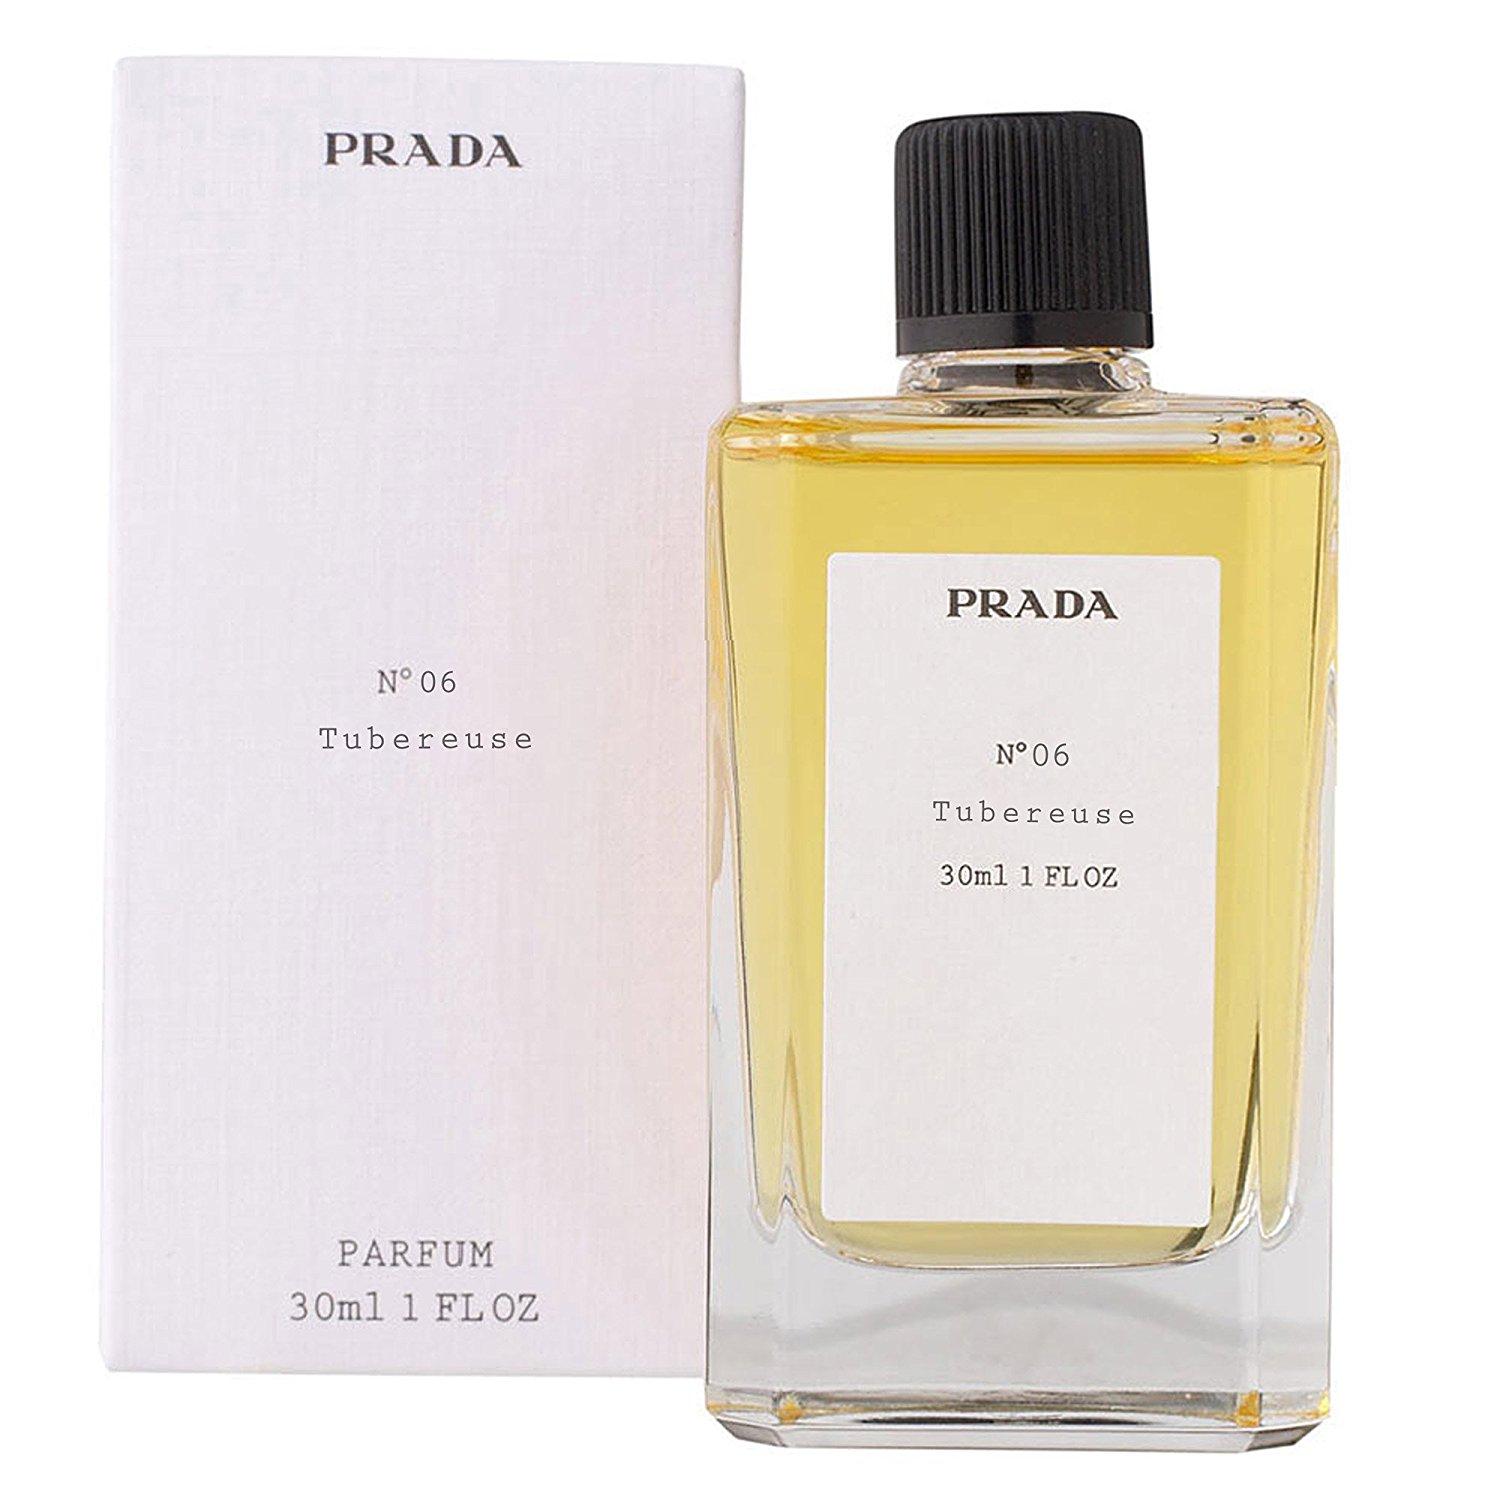 Prada Exclusive Collection No.6 "Tubereuse" 30ml, Parfum (W)